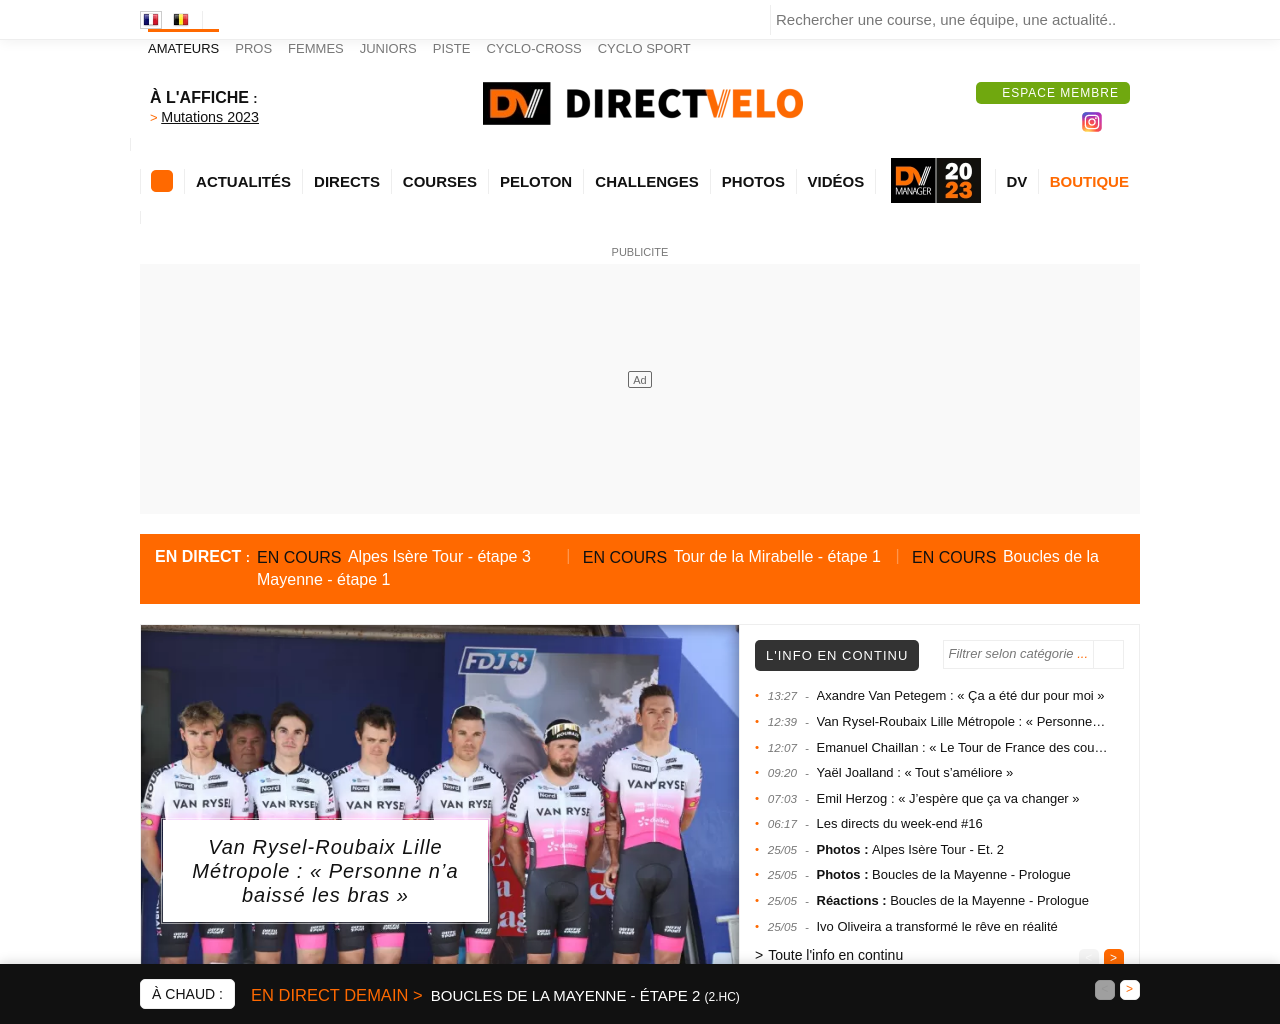 www.directvelo.com